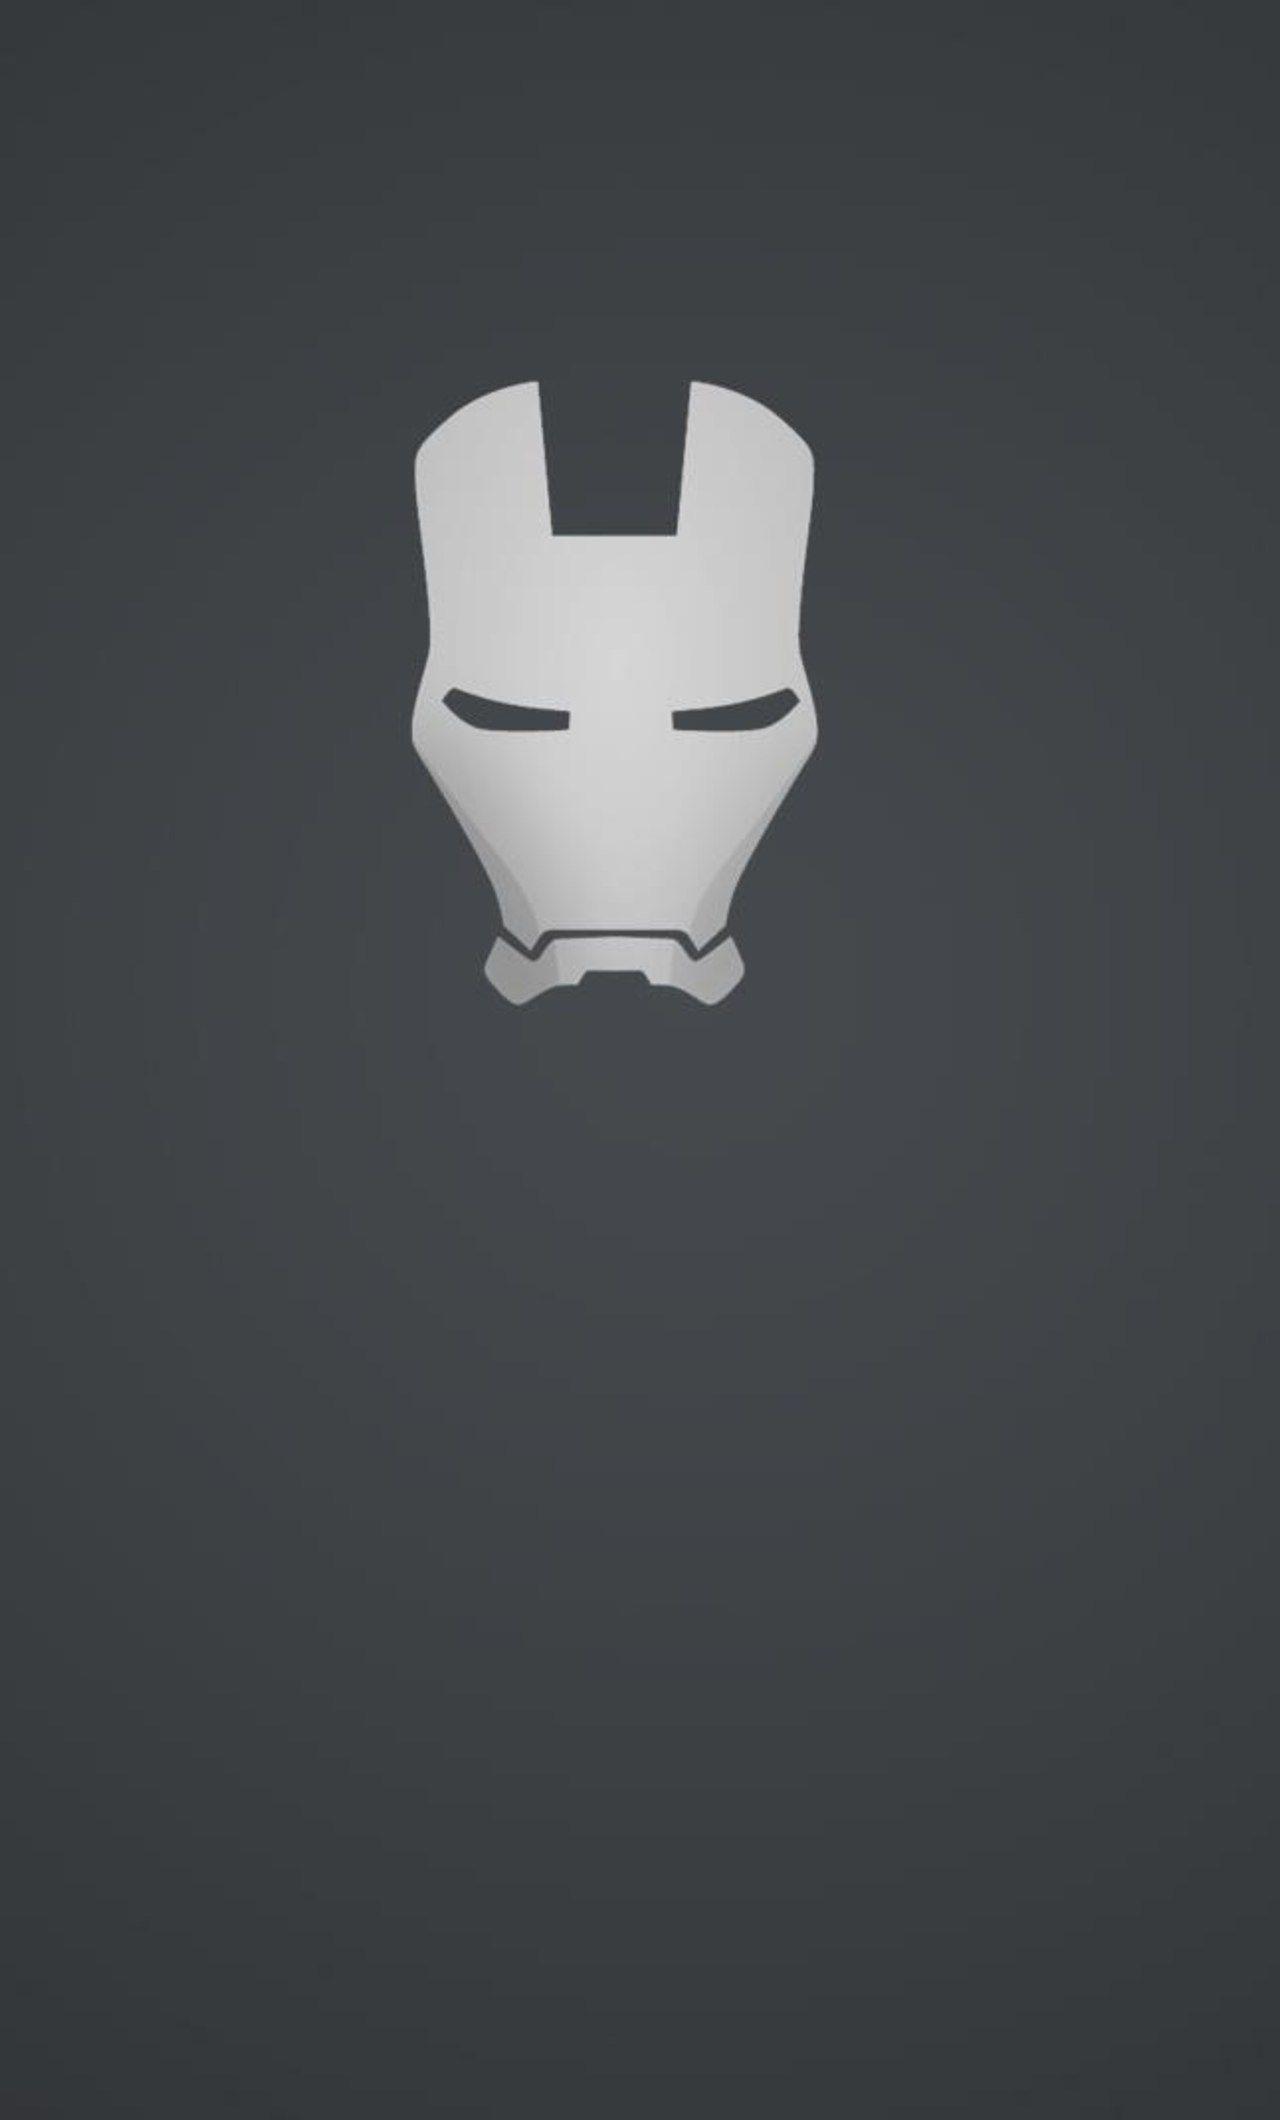 Iron Man Logo Iphone Wallpapers Top Free Iron Man Logo Iphone Backgrounds Wallpaperaccess